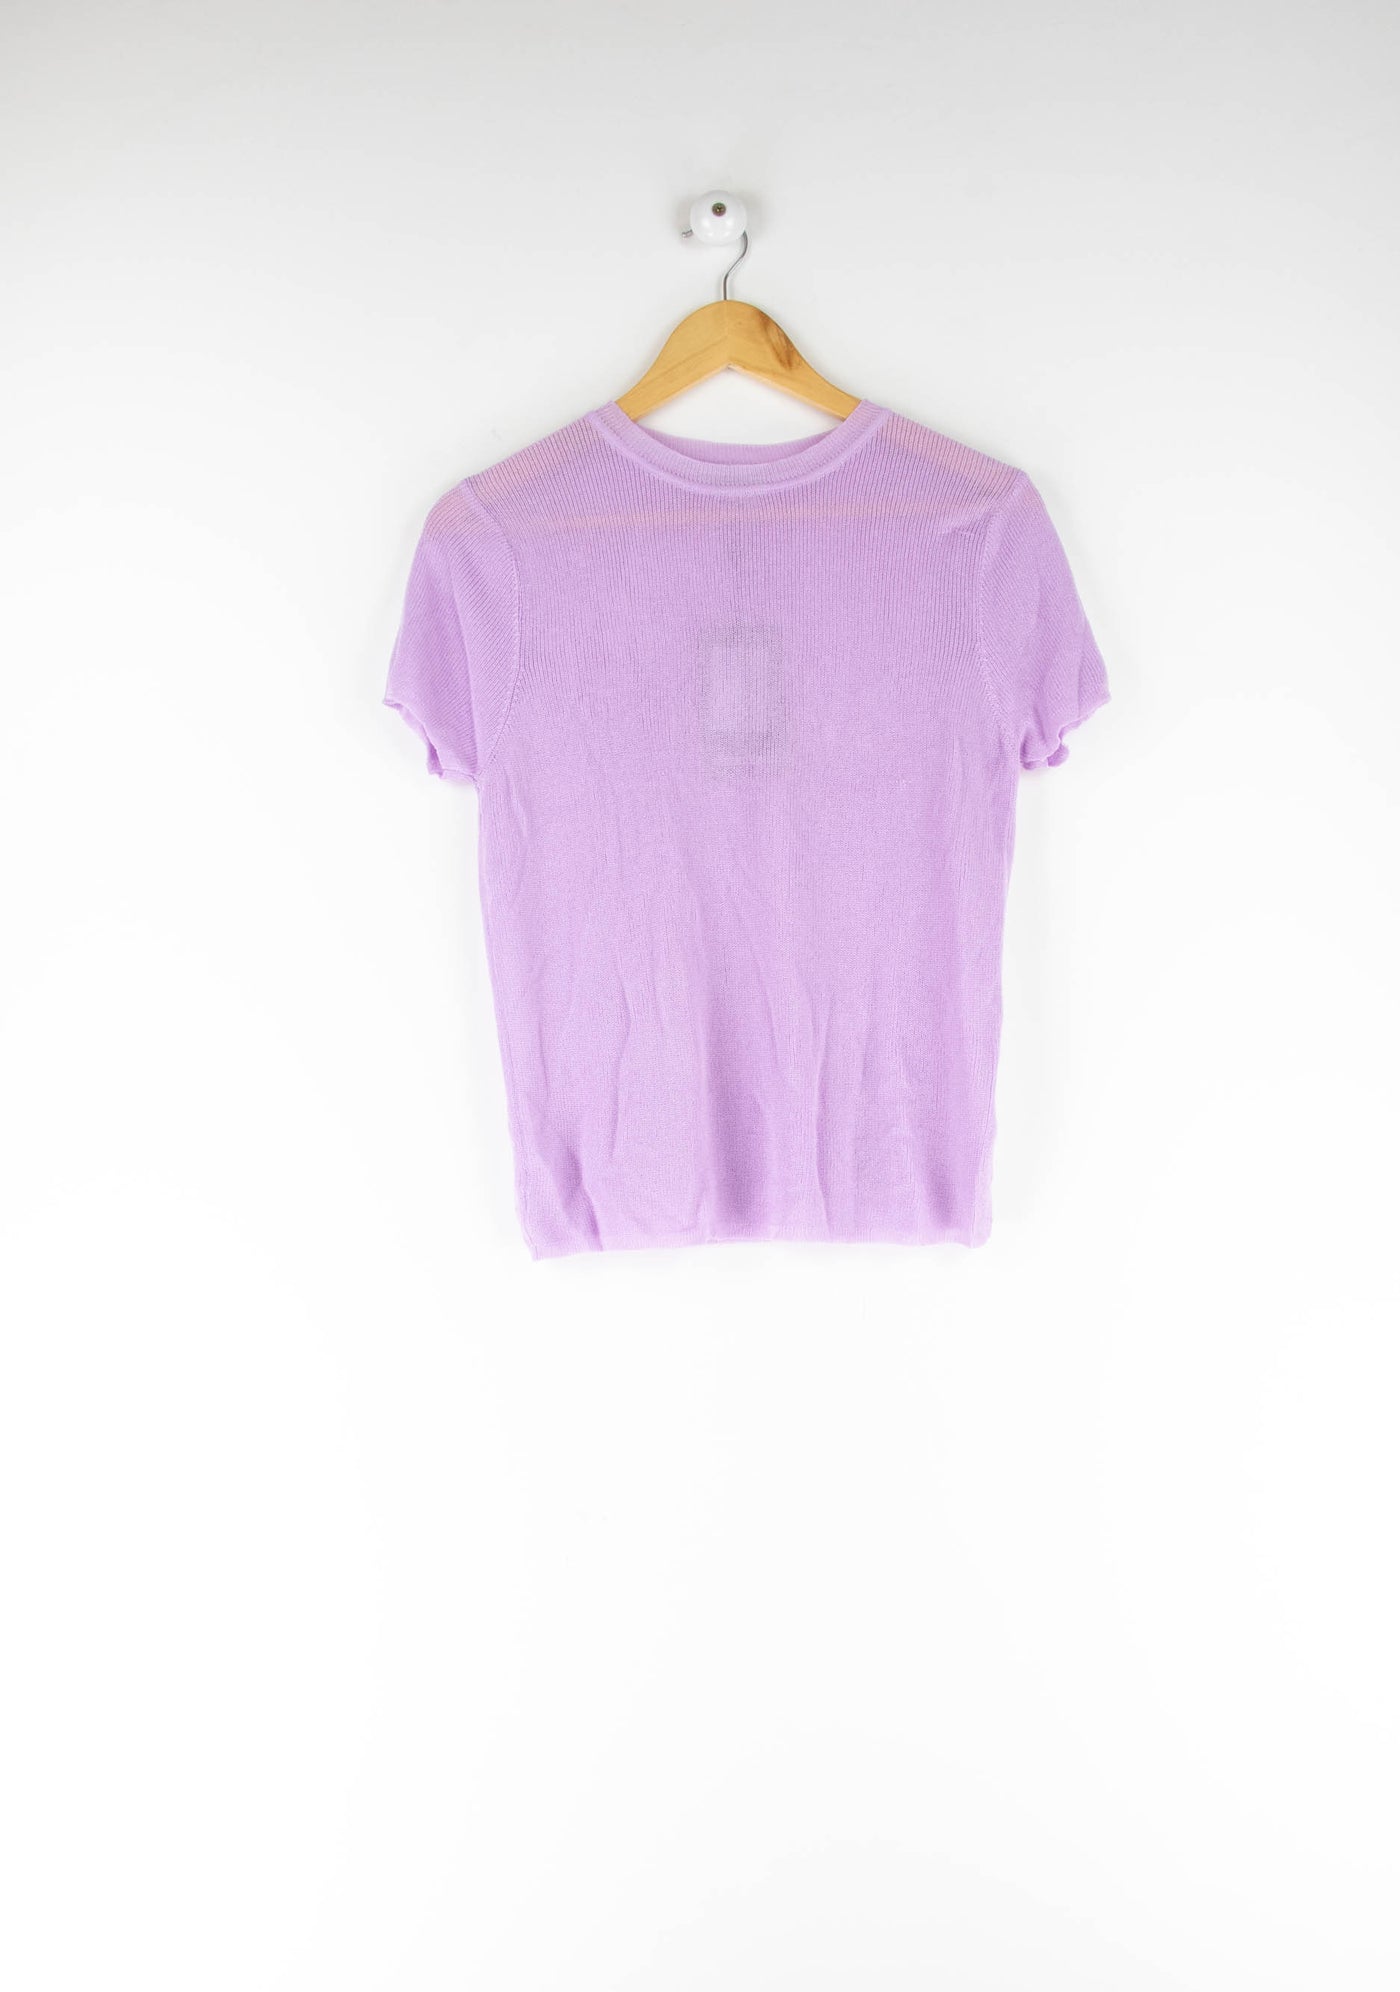 Camiseta lila transparente de punto NUEVO